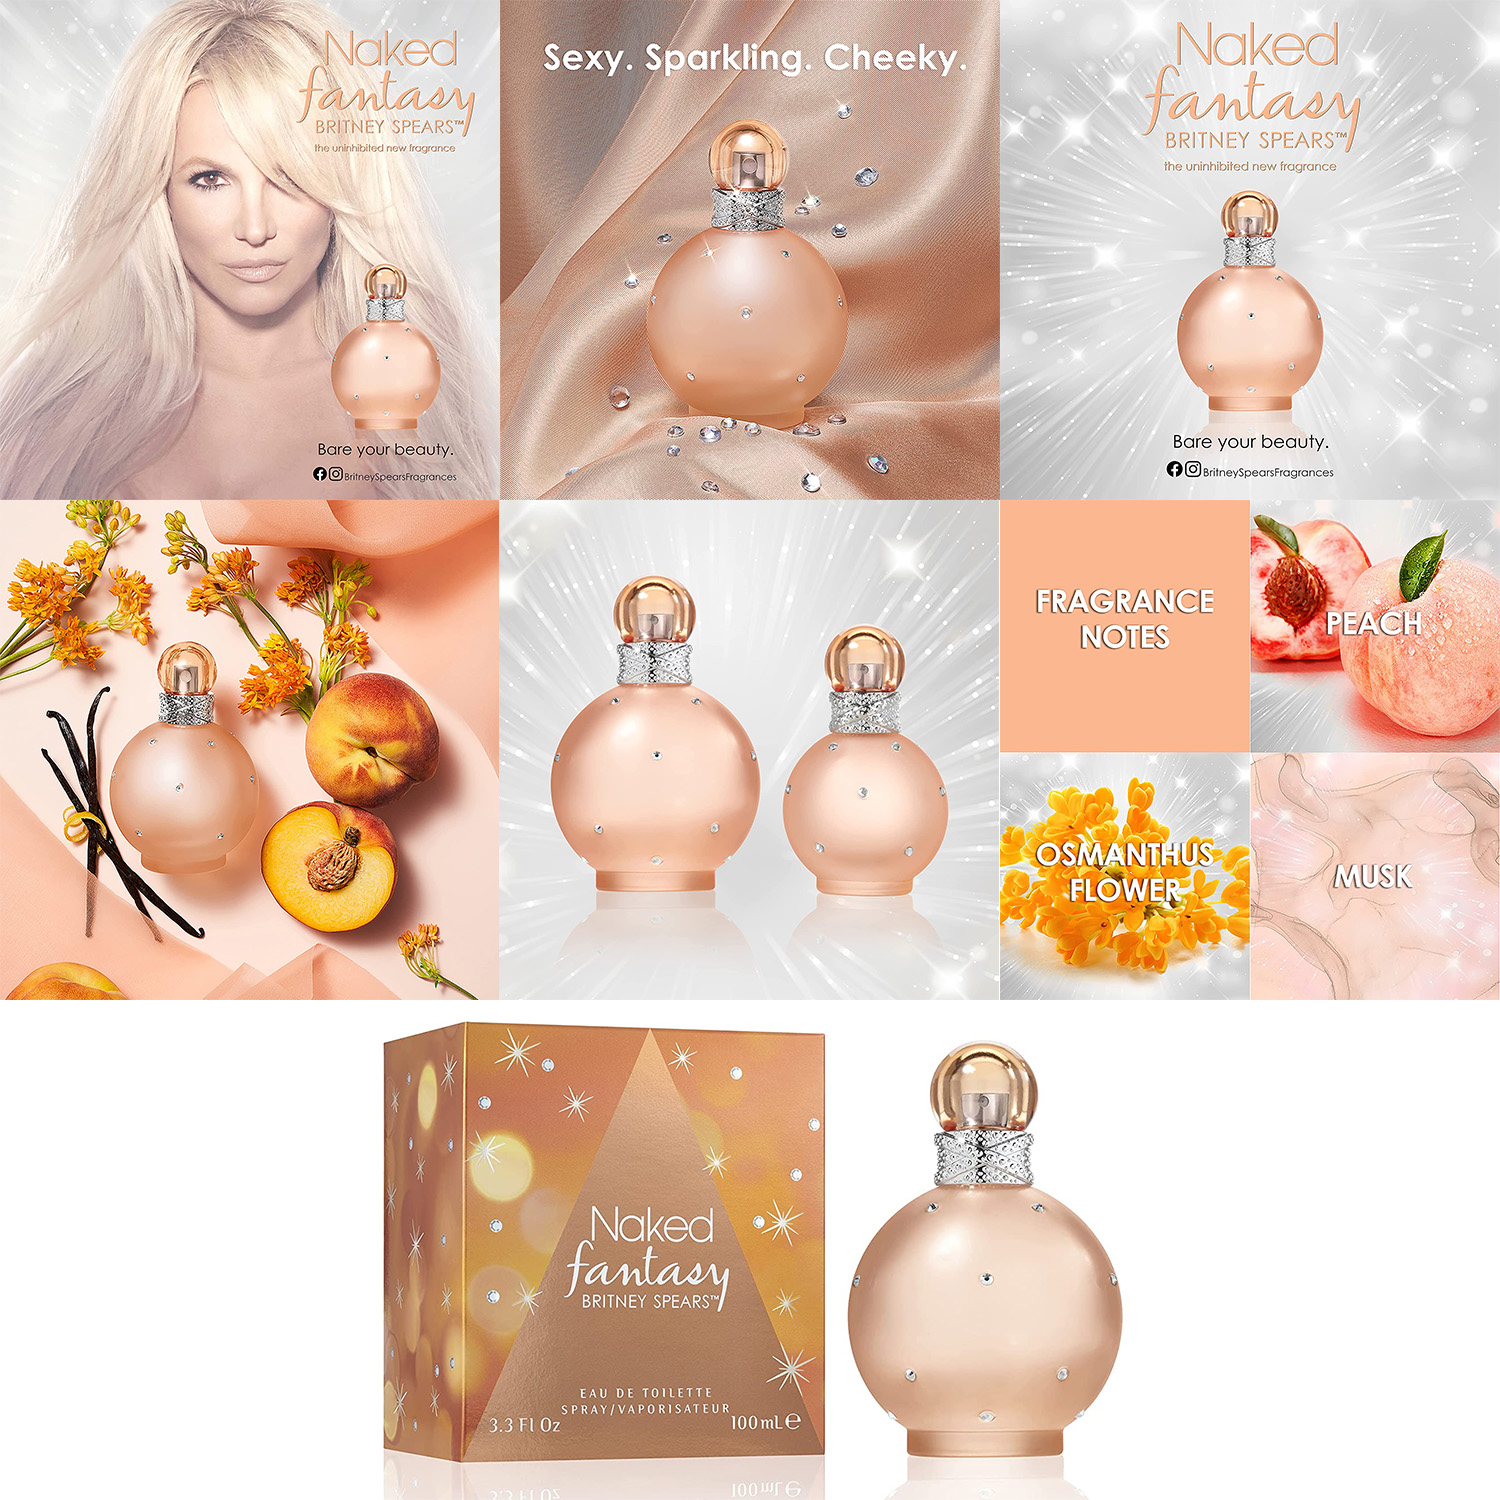 Britney Spears Naked Fantasy Celebrity Perfume